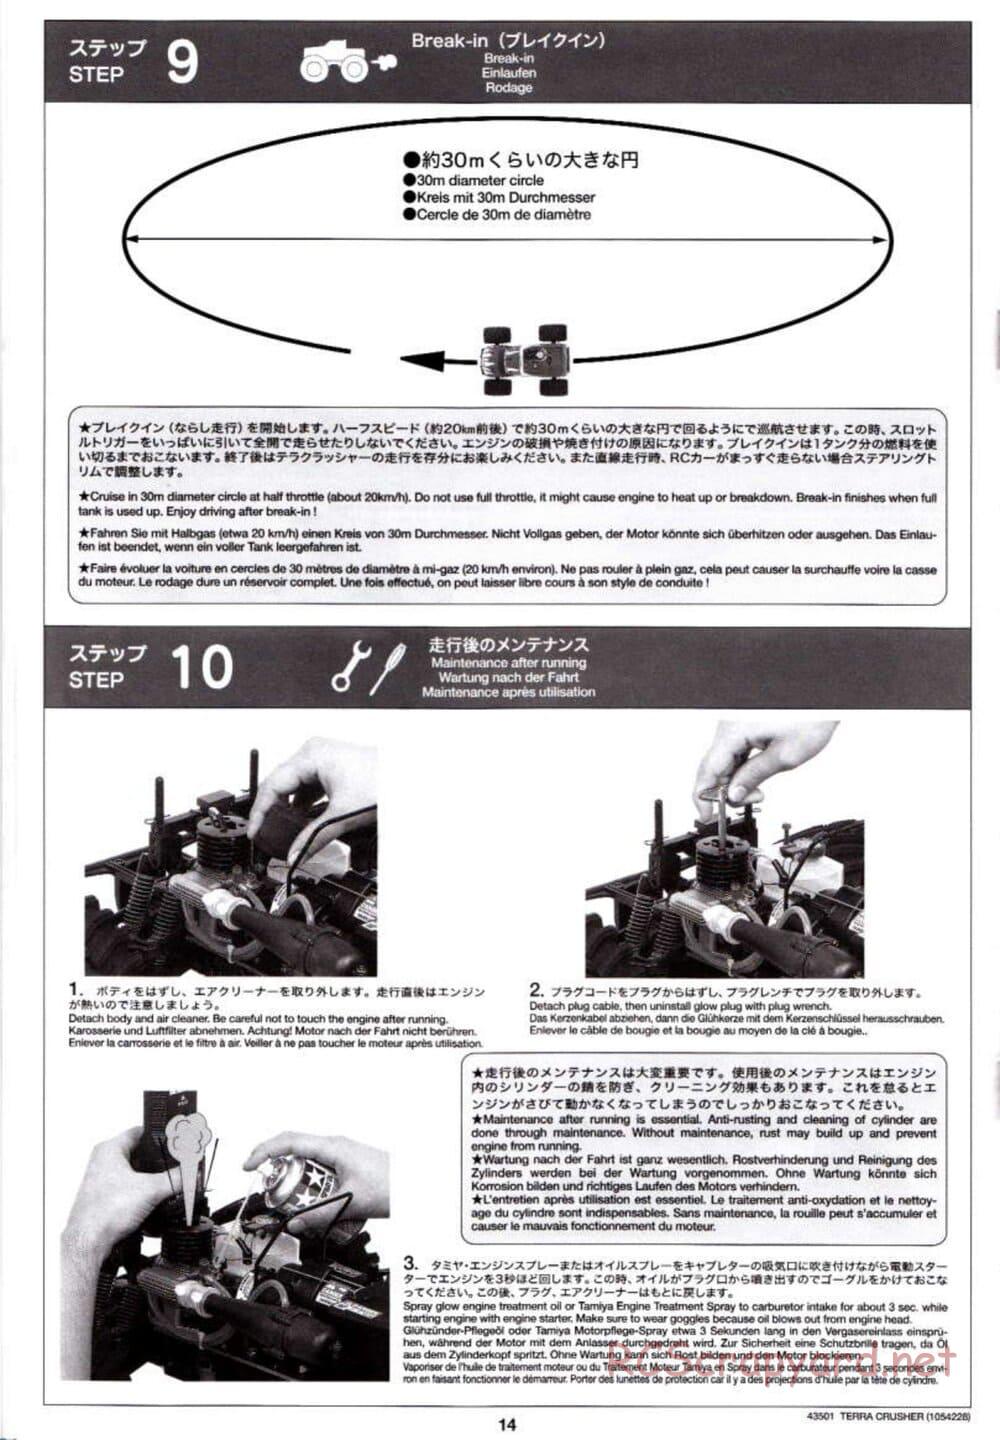 Tamiya - Terra Crusher - TGM-02 Chassis - Manual - Page 14